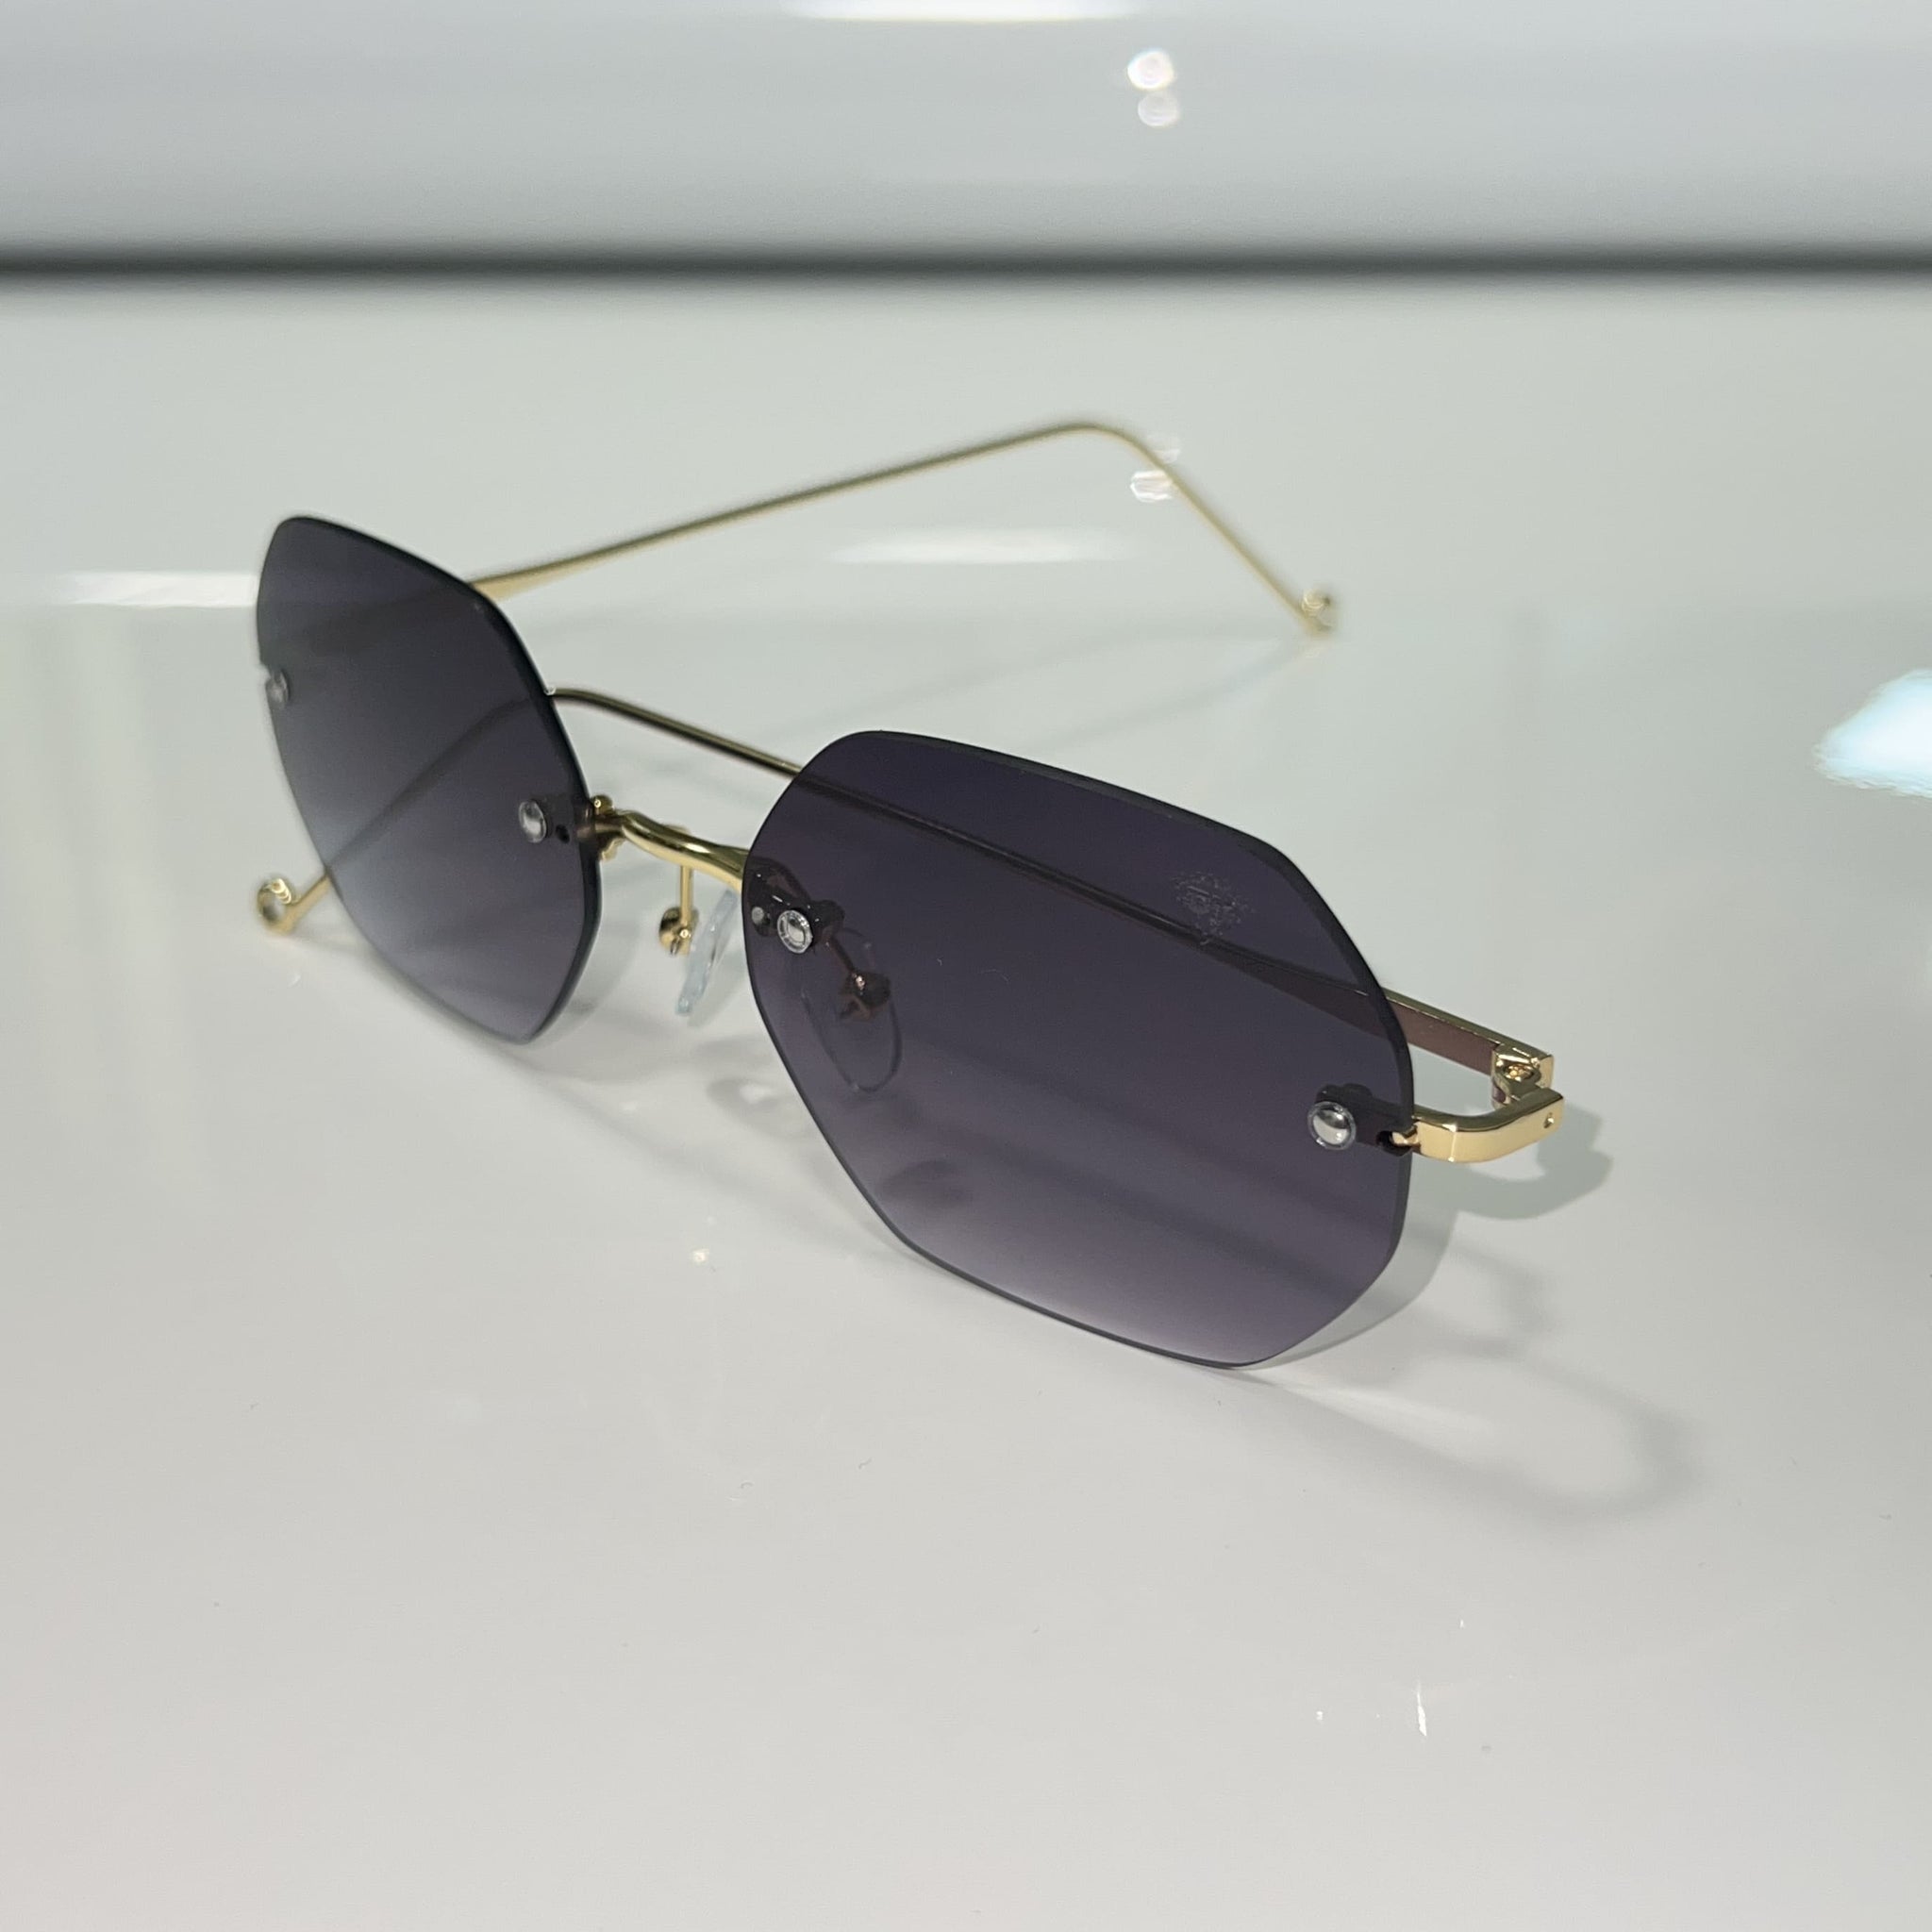 Star Glasses - Sehgal Glasses - 14k gold plated - Black Shade